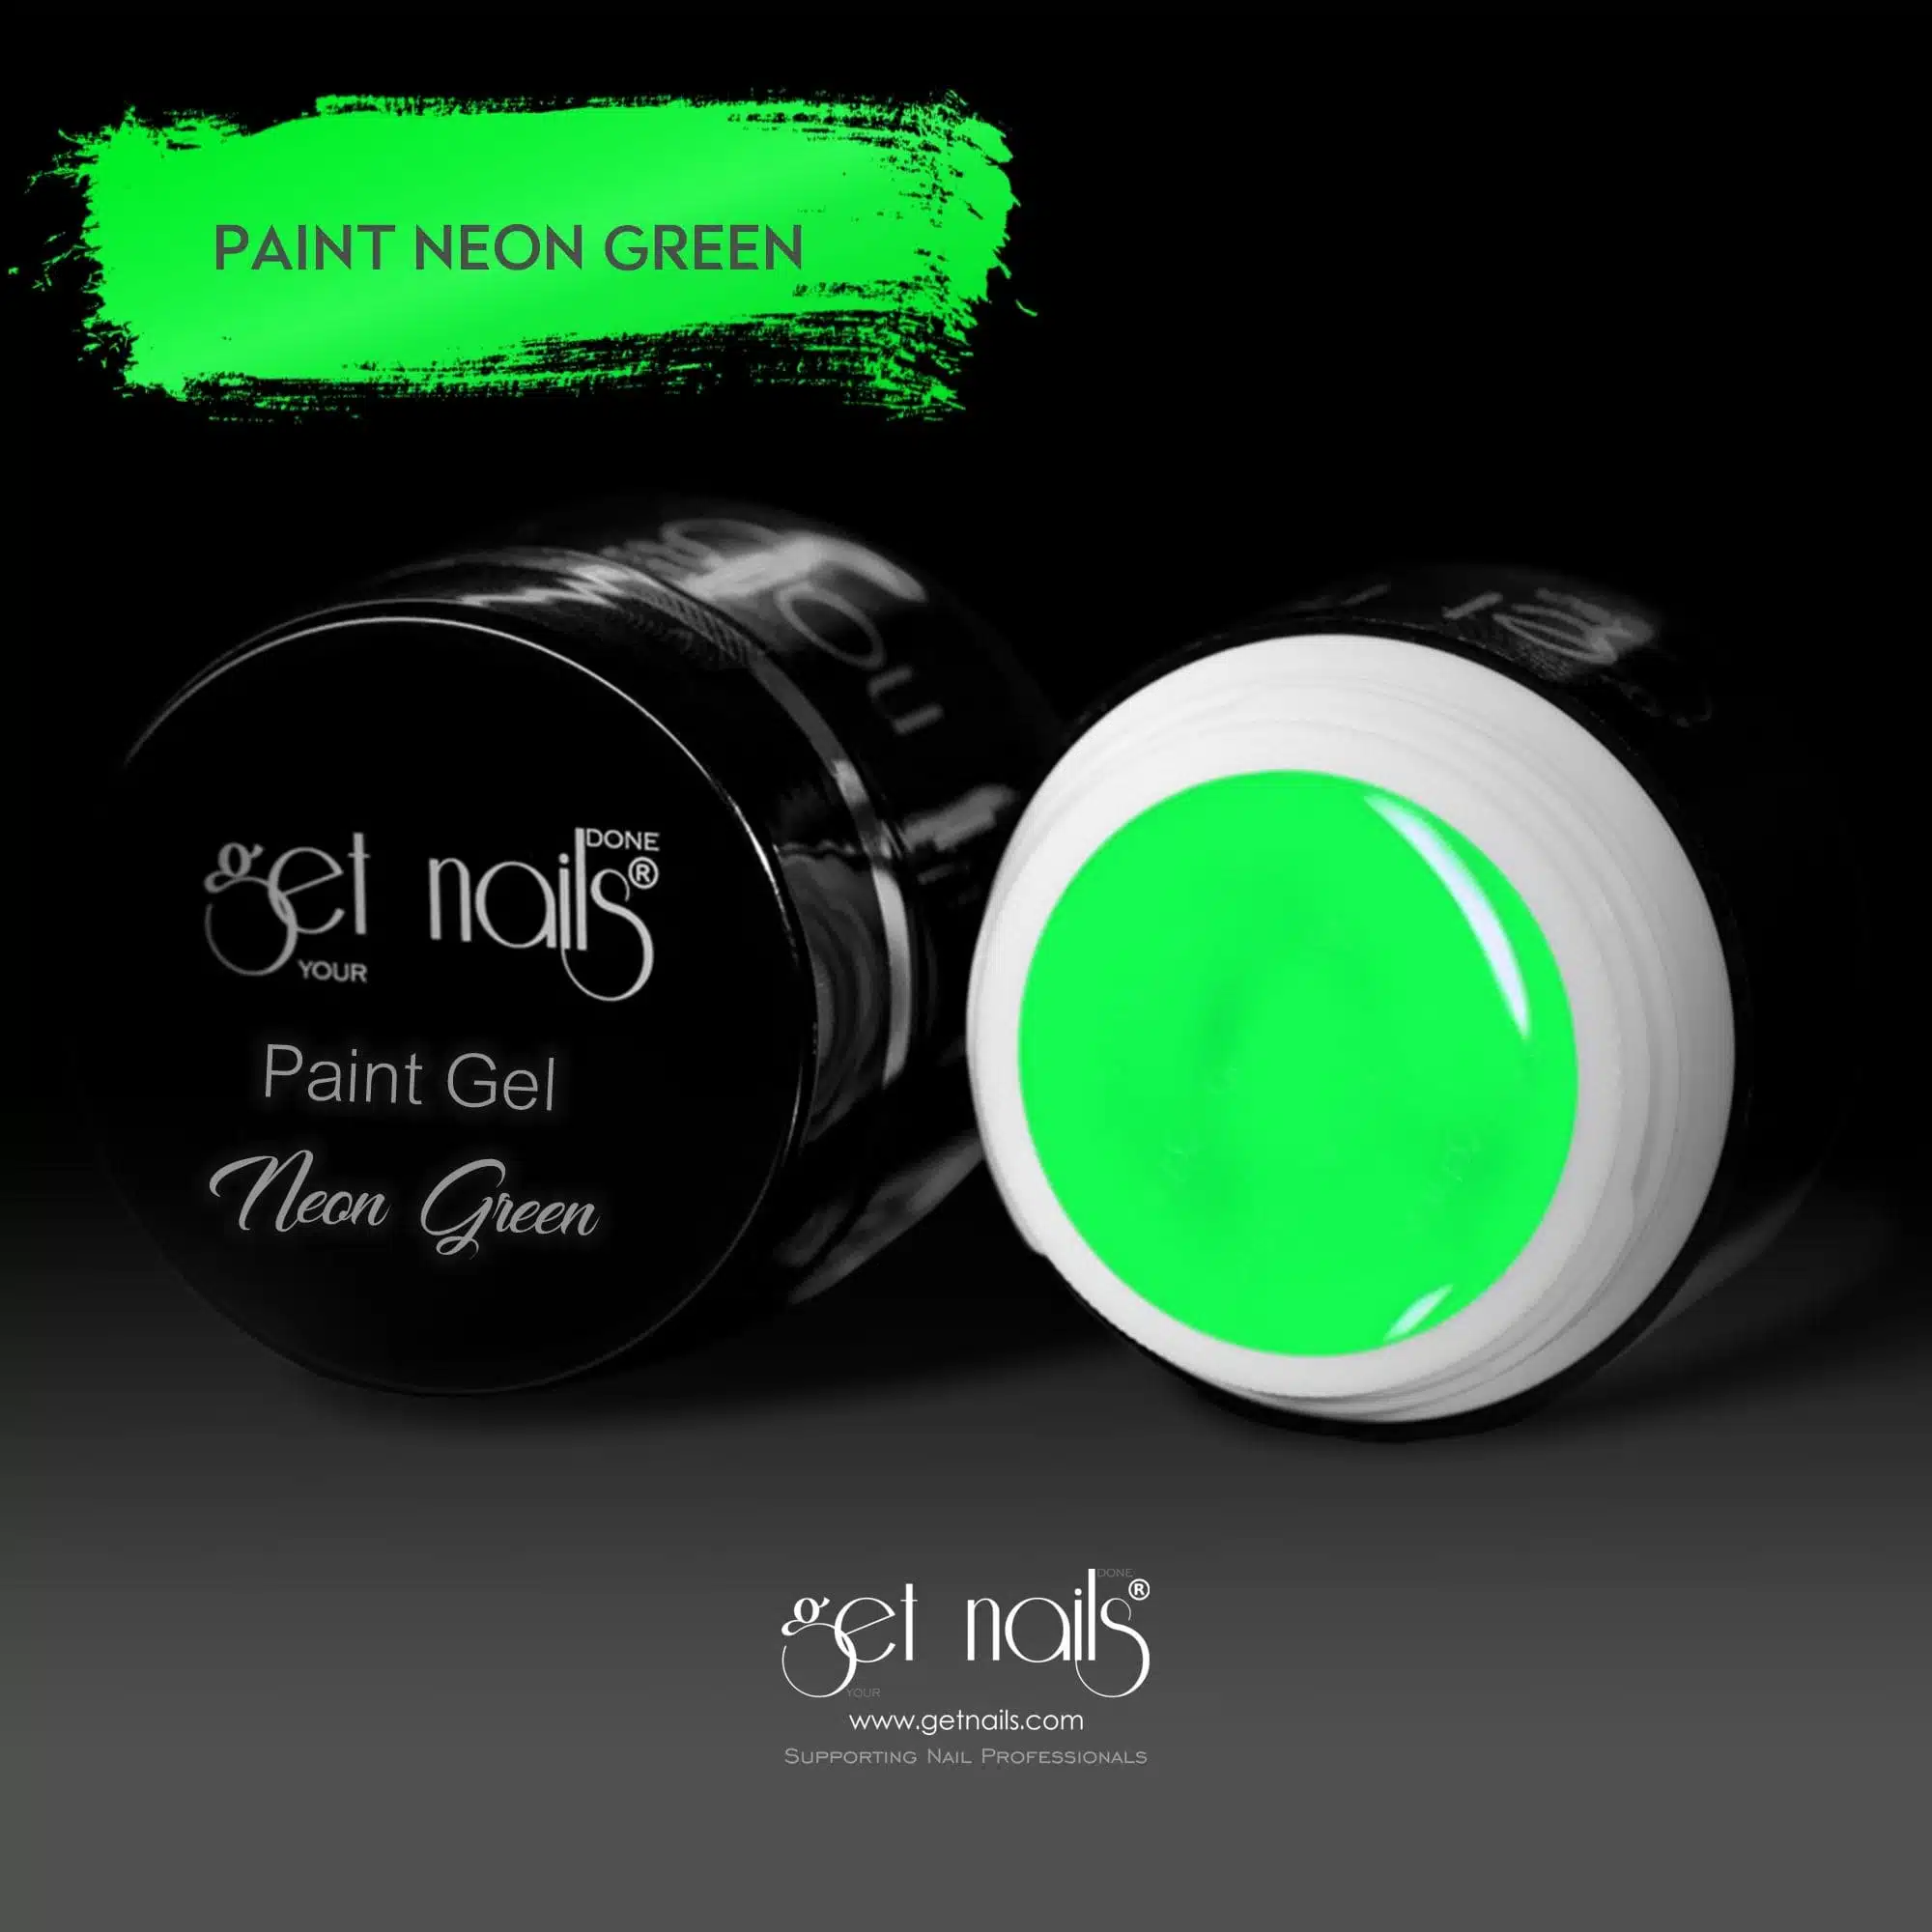 Get Nails Austria - Paint Gel Neon Green 5g